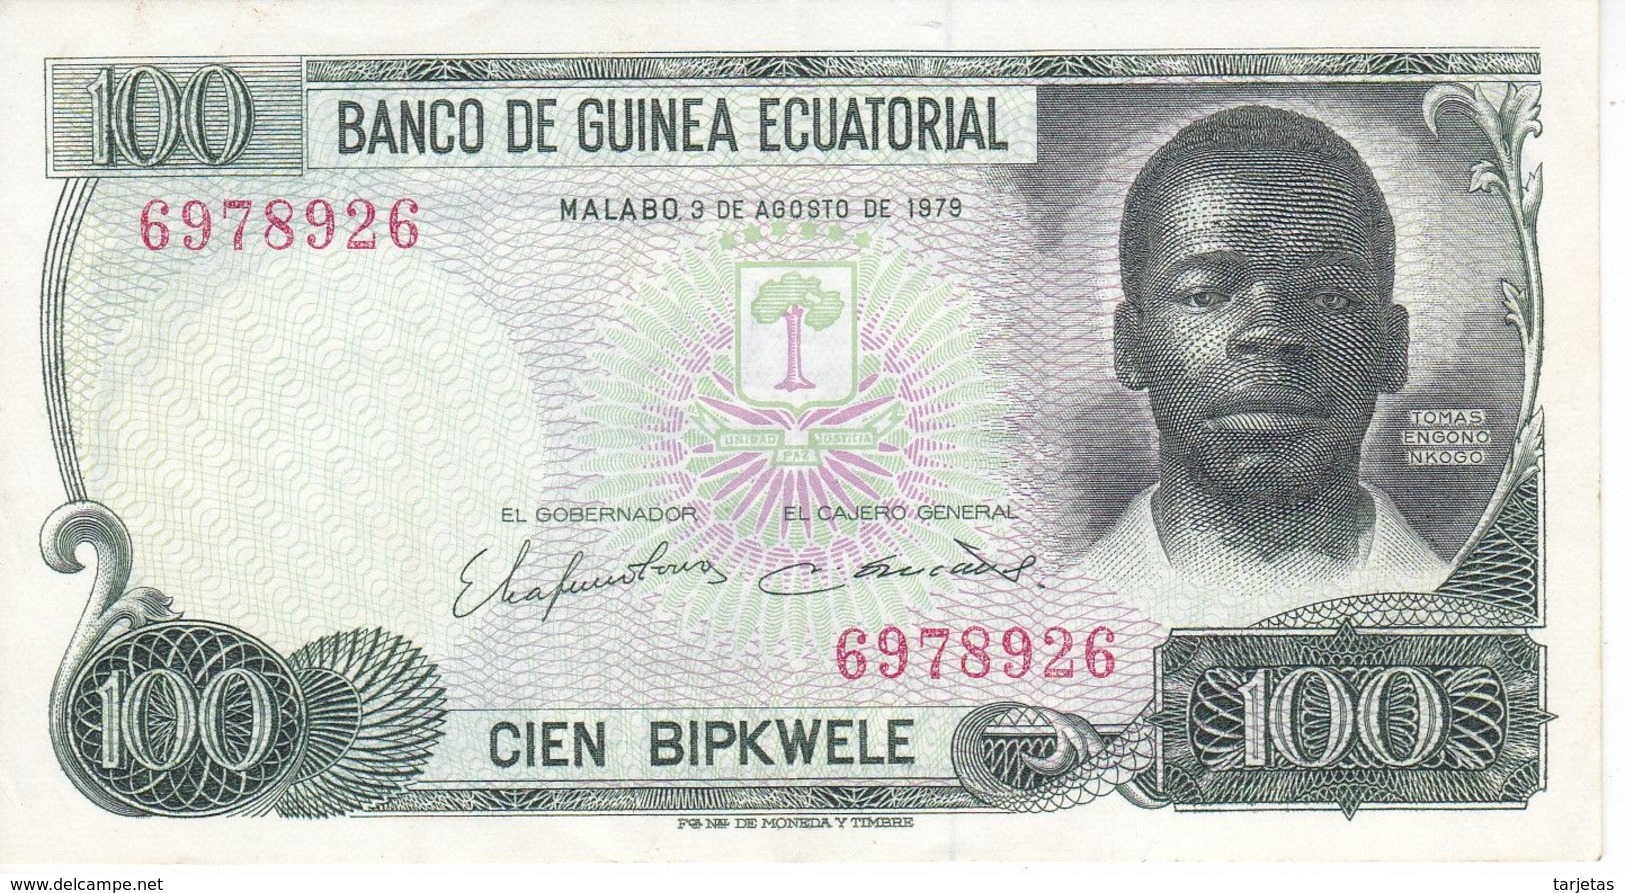 BILLETE DE GUINEA ECUATORIAL DE 100 BIPKWELE DEL AÑO 1979 EN CALIDAD EBC (XF)  (BANKNOTE) - Equatorial Guinea